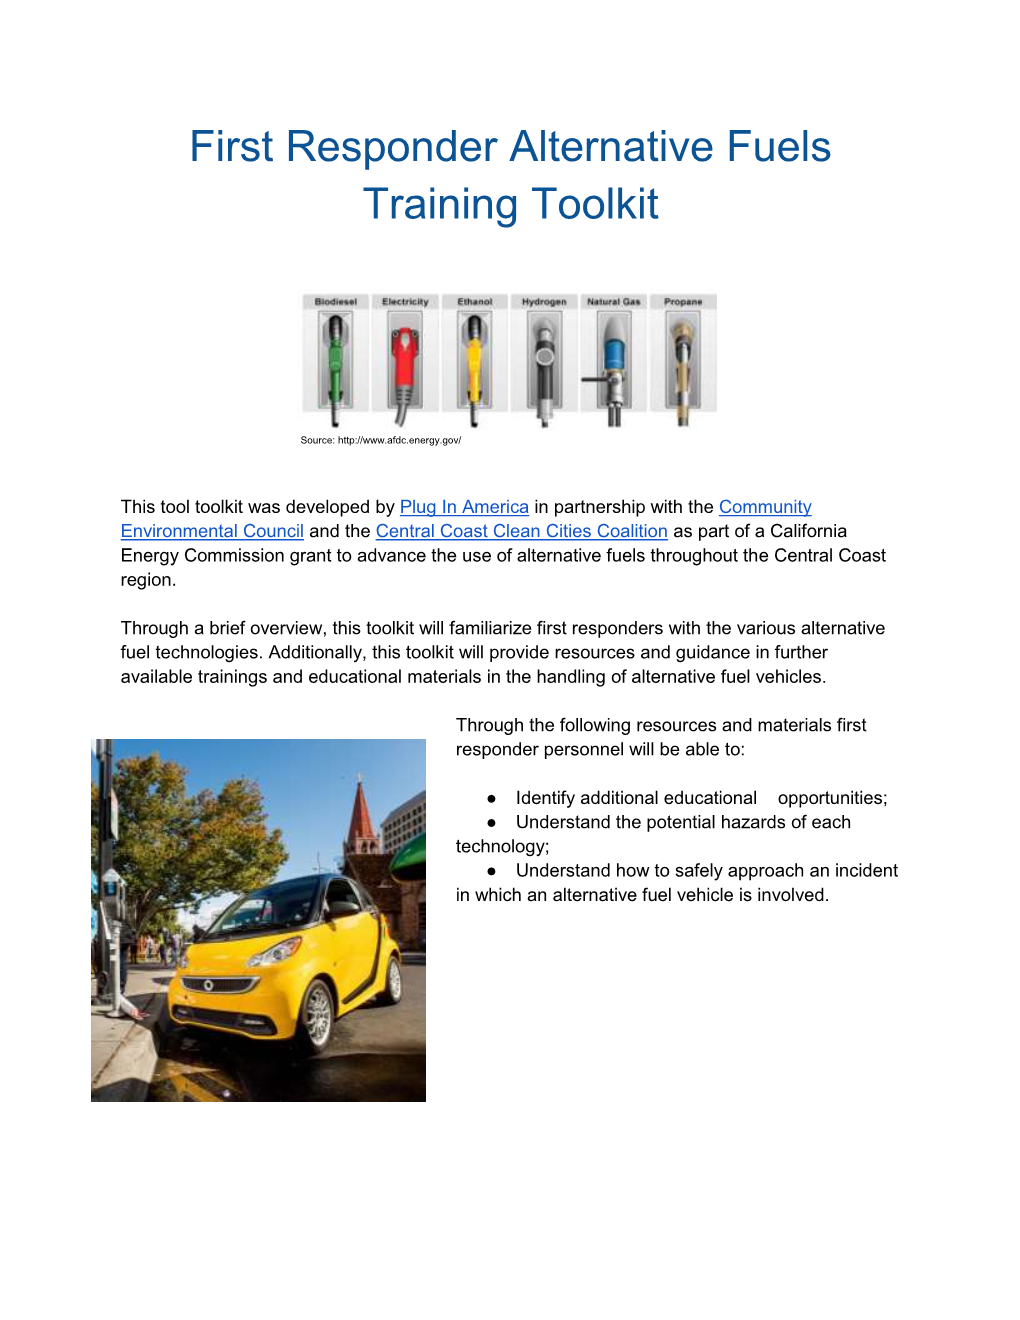 First Responder Alternative Fuels Training Toolkit